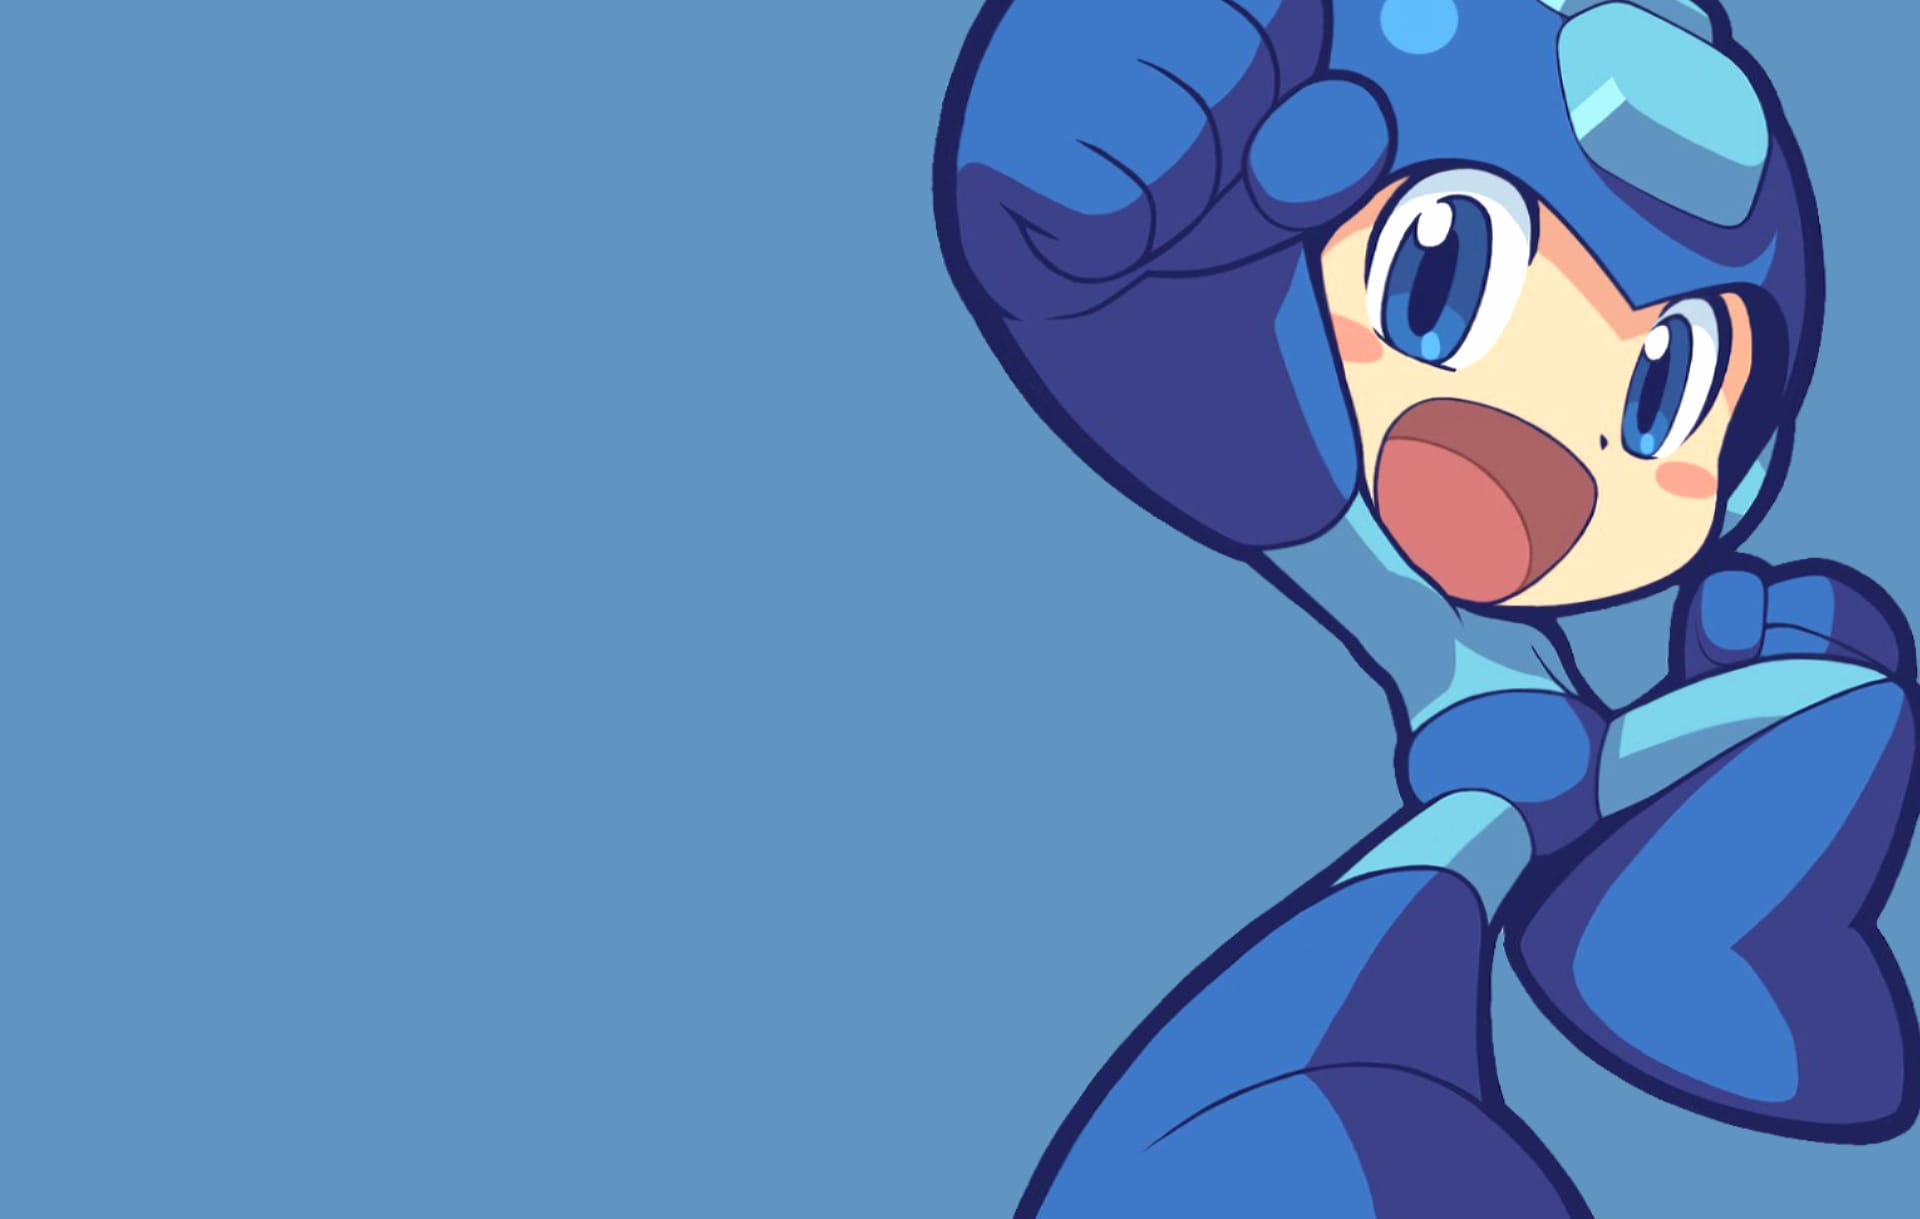 Mega Man Powered Up at 2048 x 2048 iPad size wallpapers HD quality